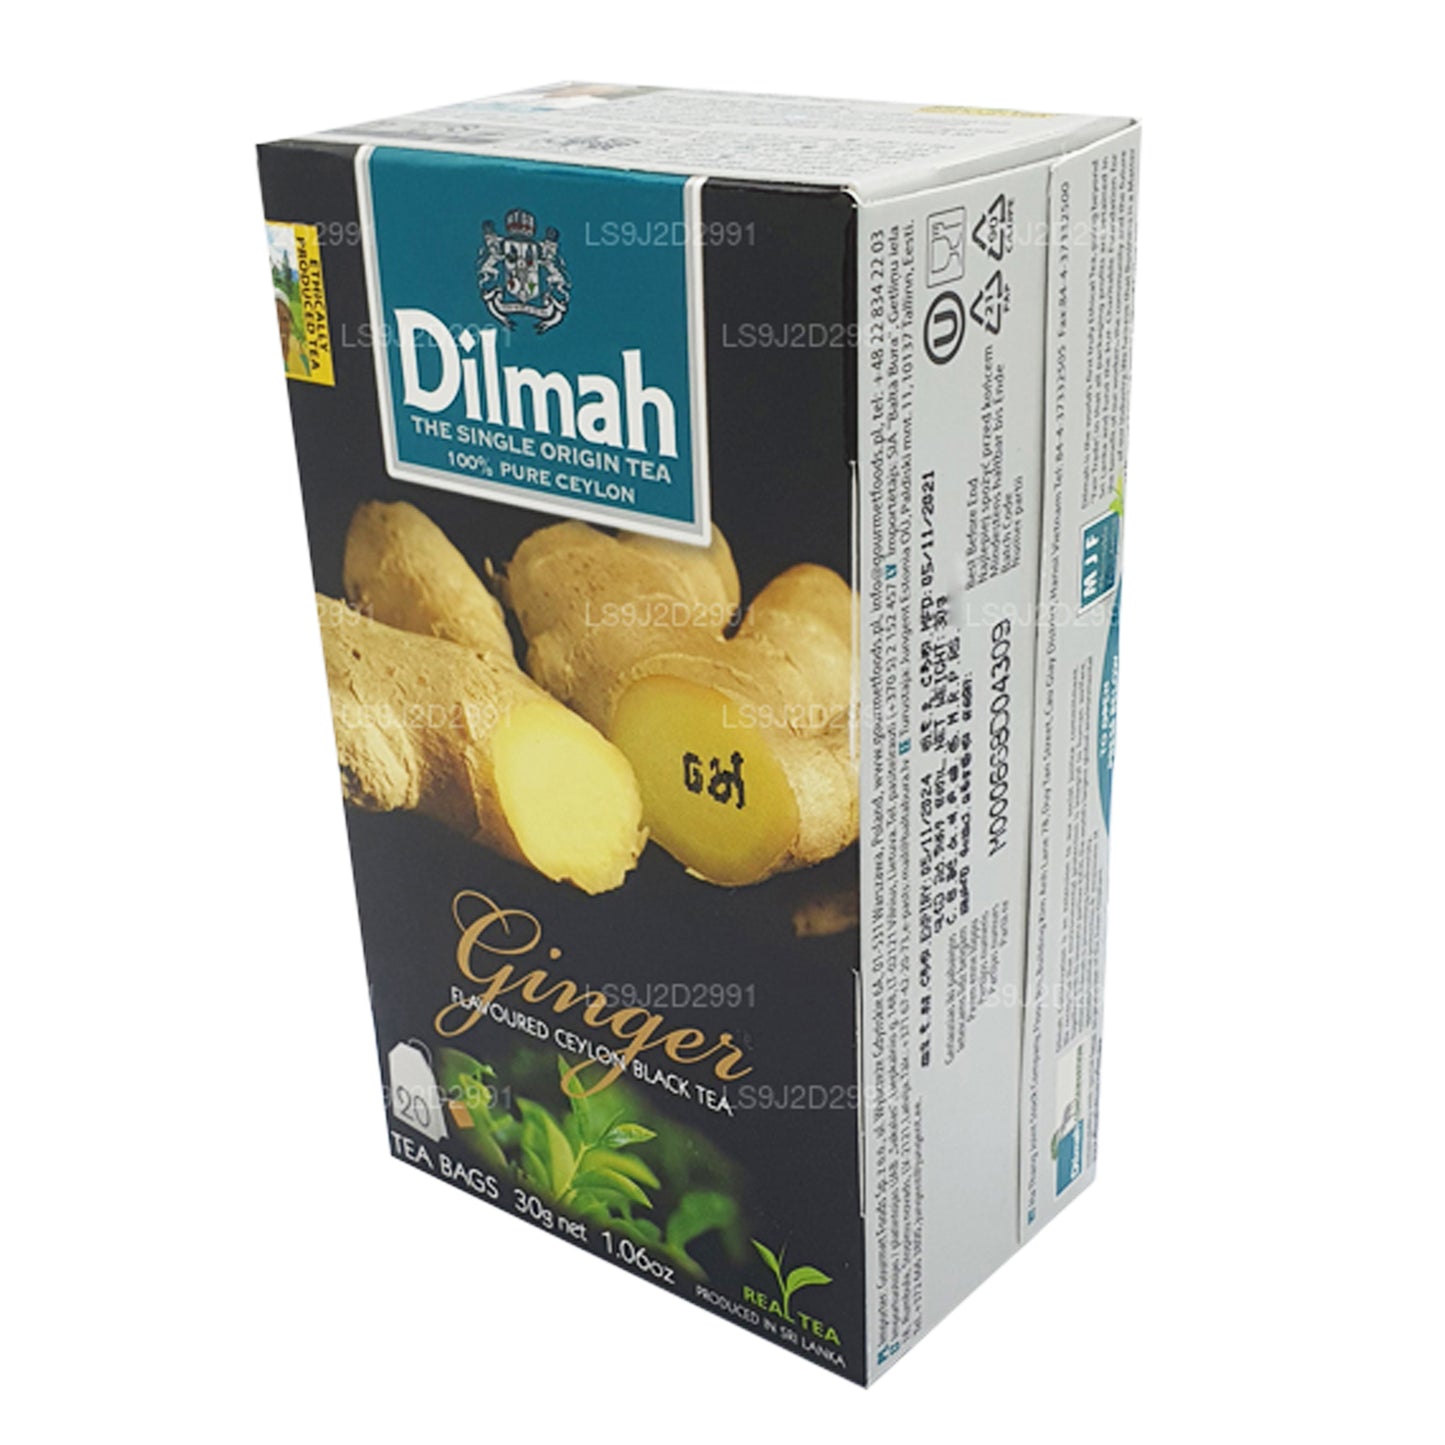 Dilmah Ginger Flavored Black Tea (30g) 20 Tea Bags